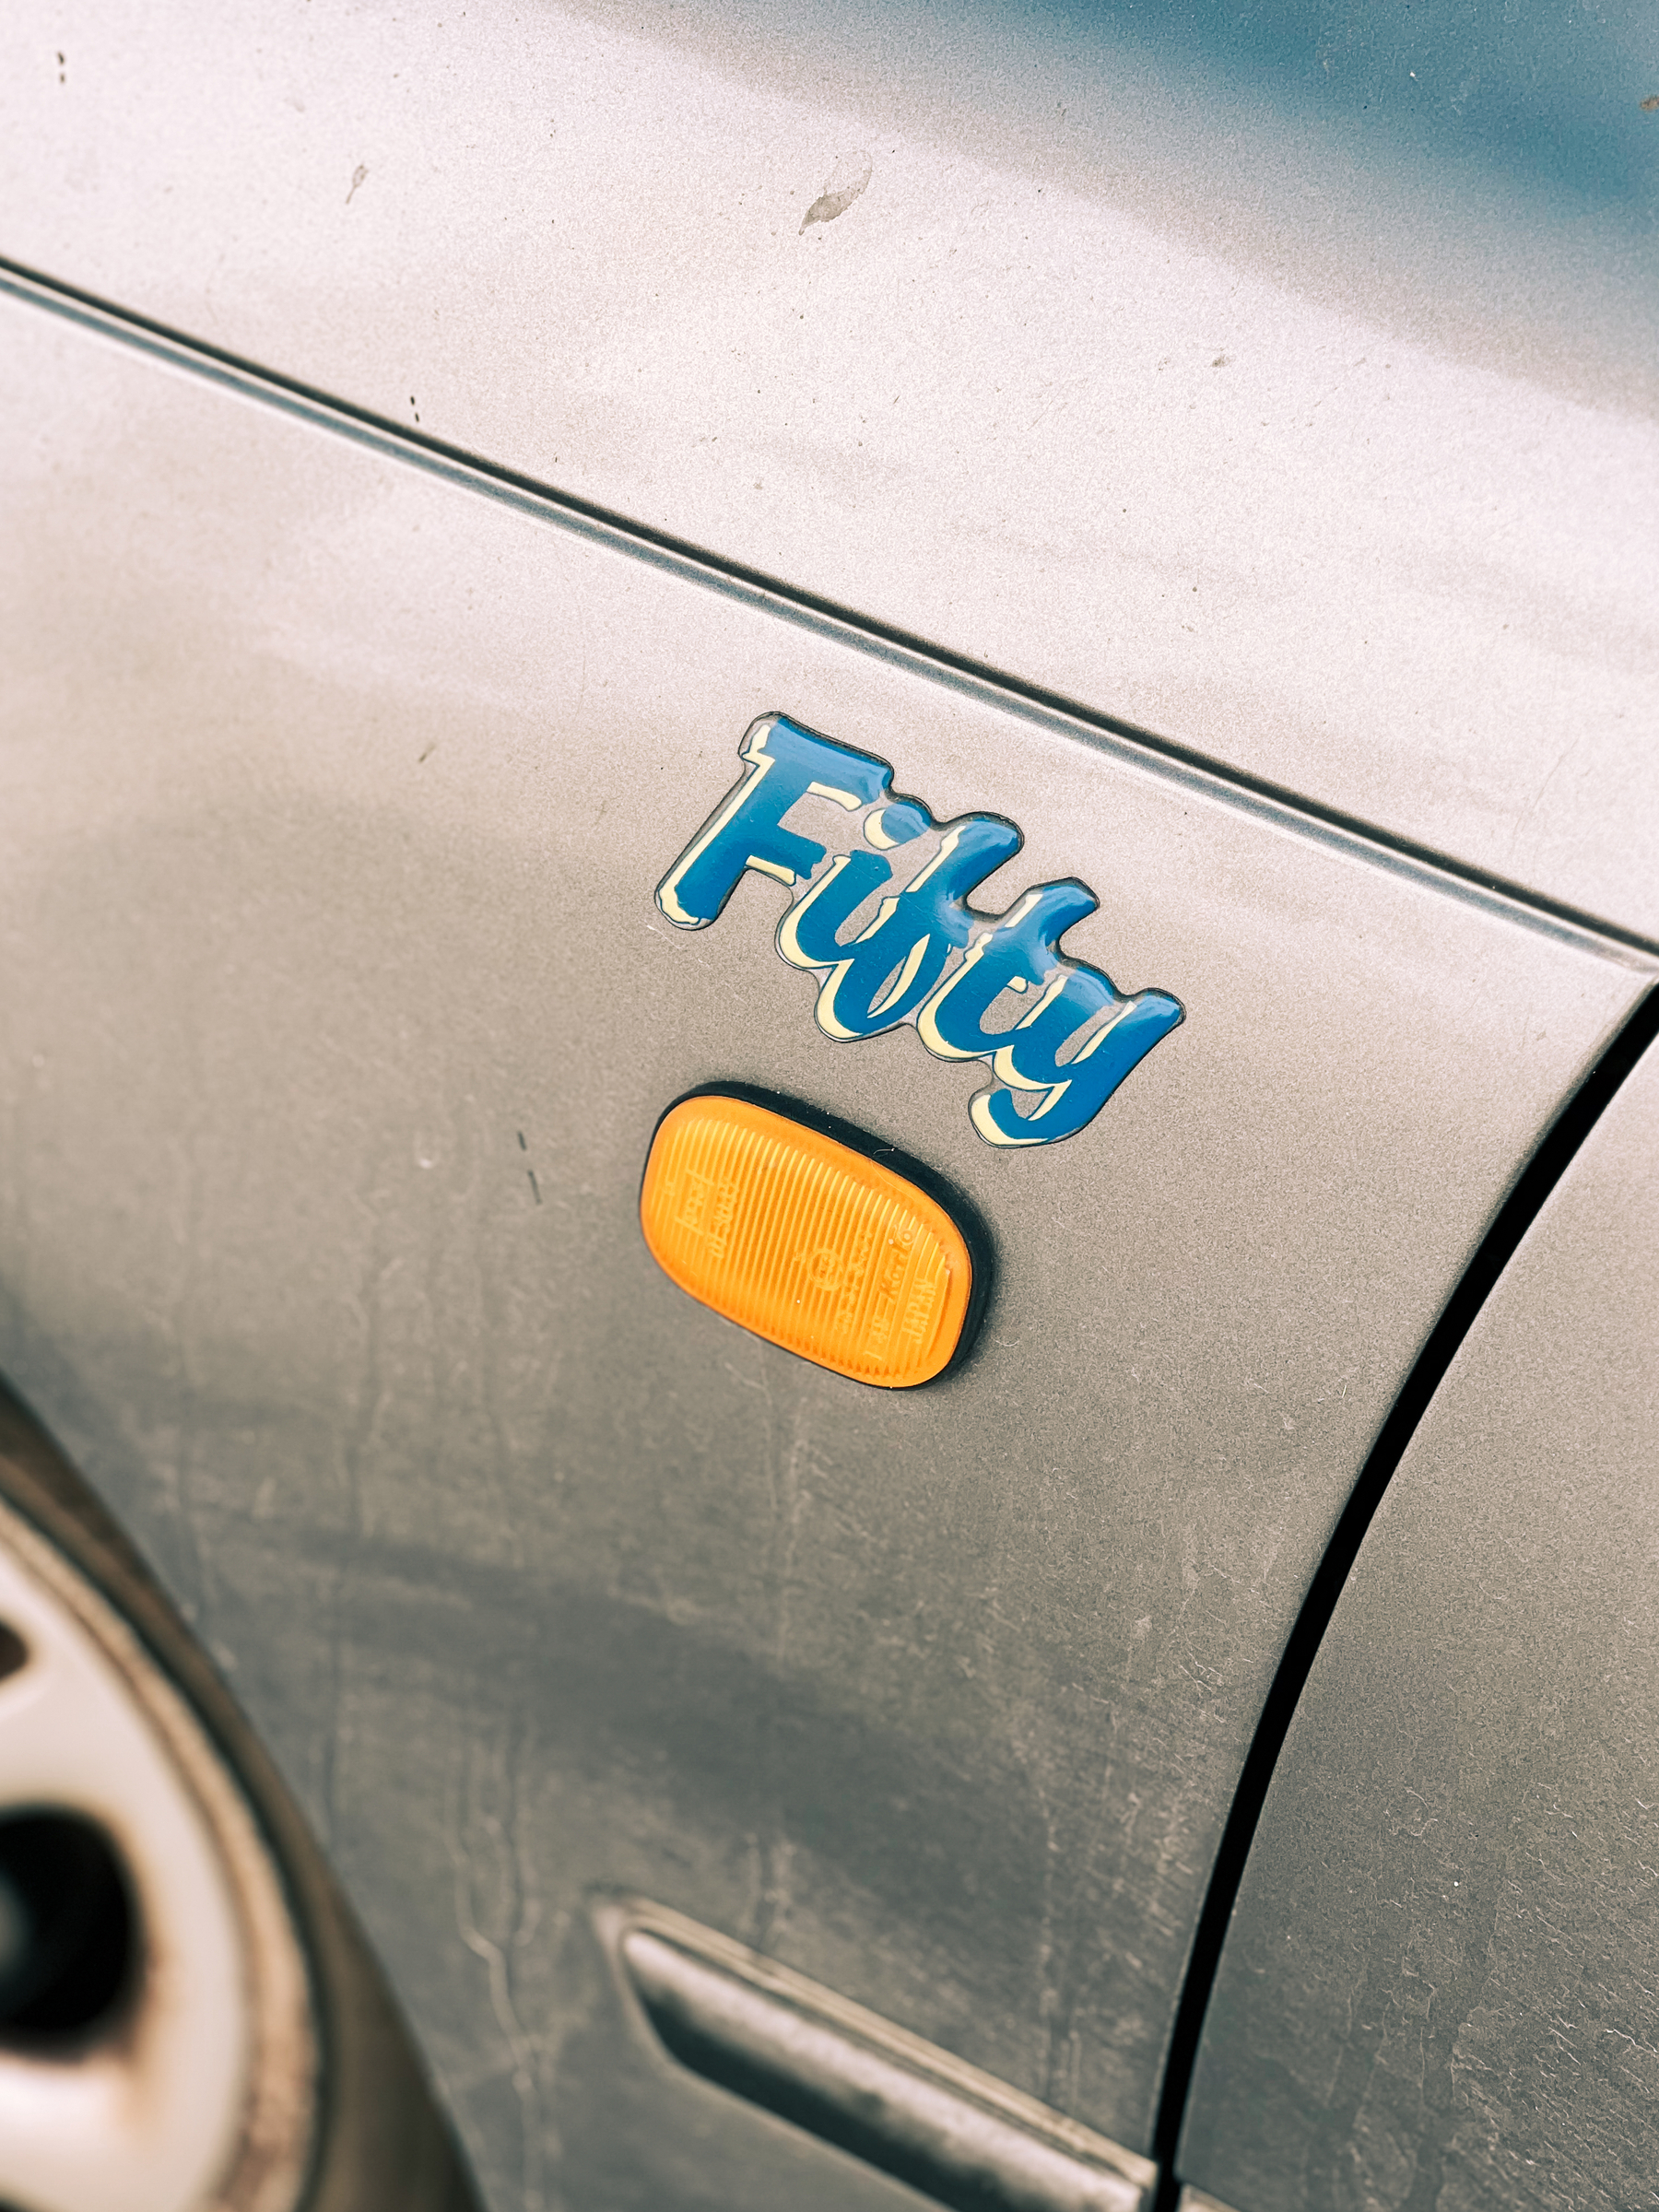 A “Fifty” sticker on a dirty car.